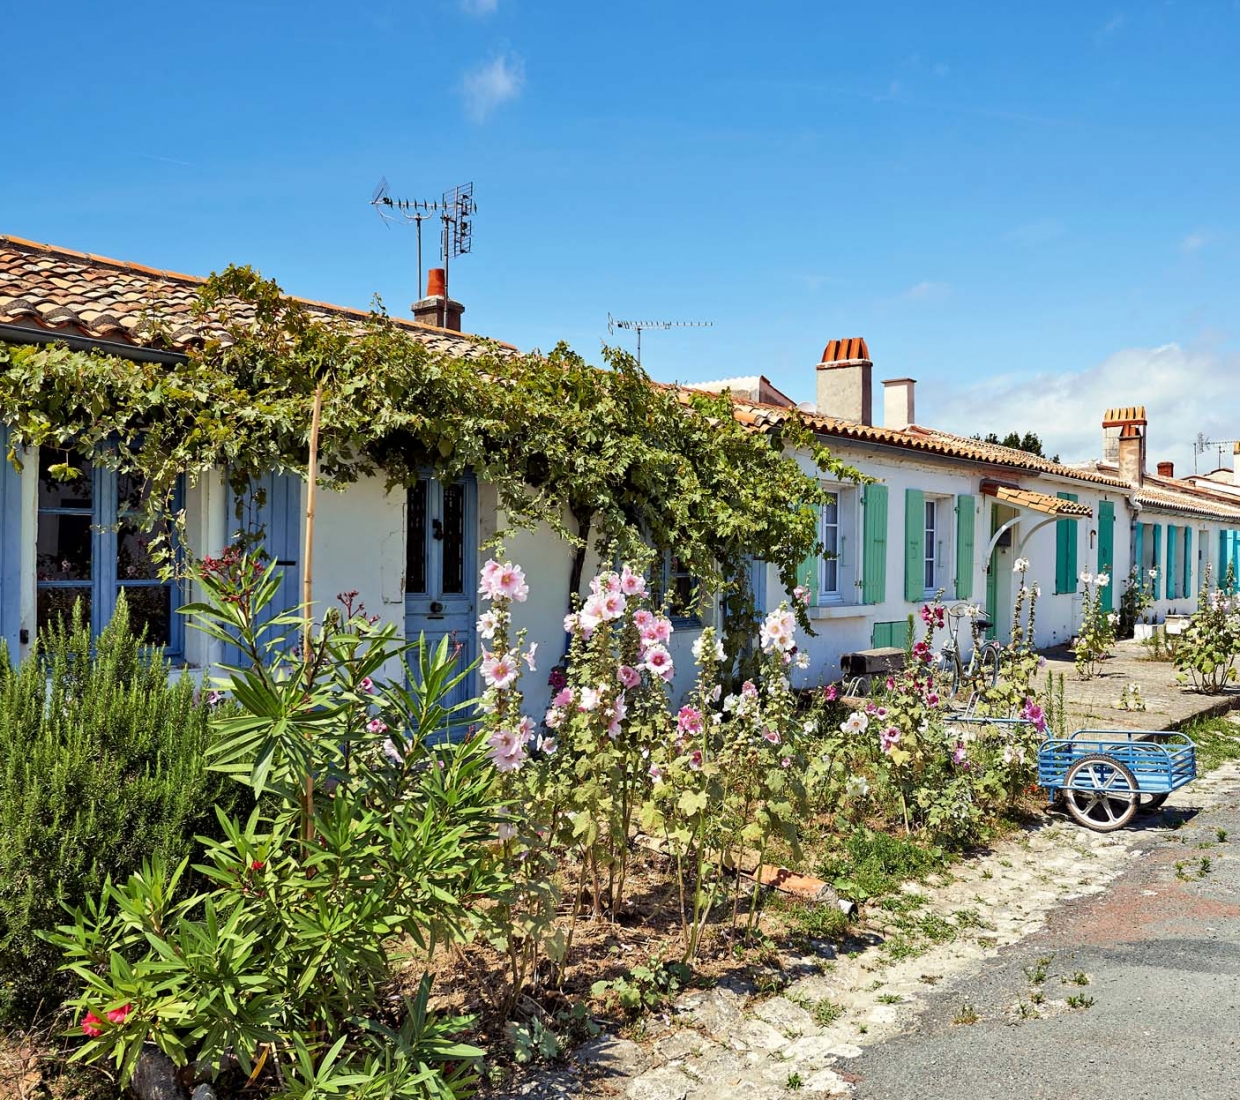 Hotéis boutique, hotéis de charme e turismo rural Poitou-Charentes